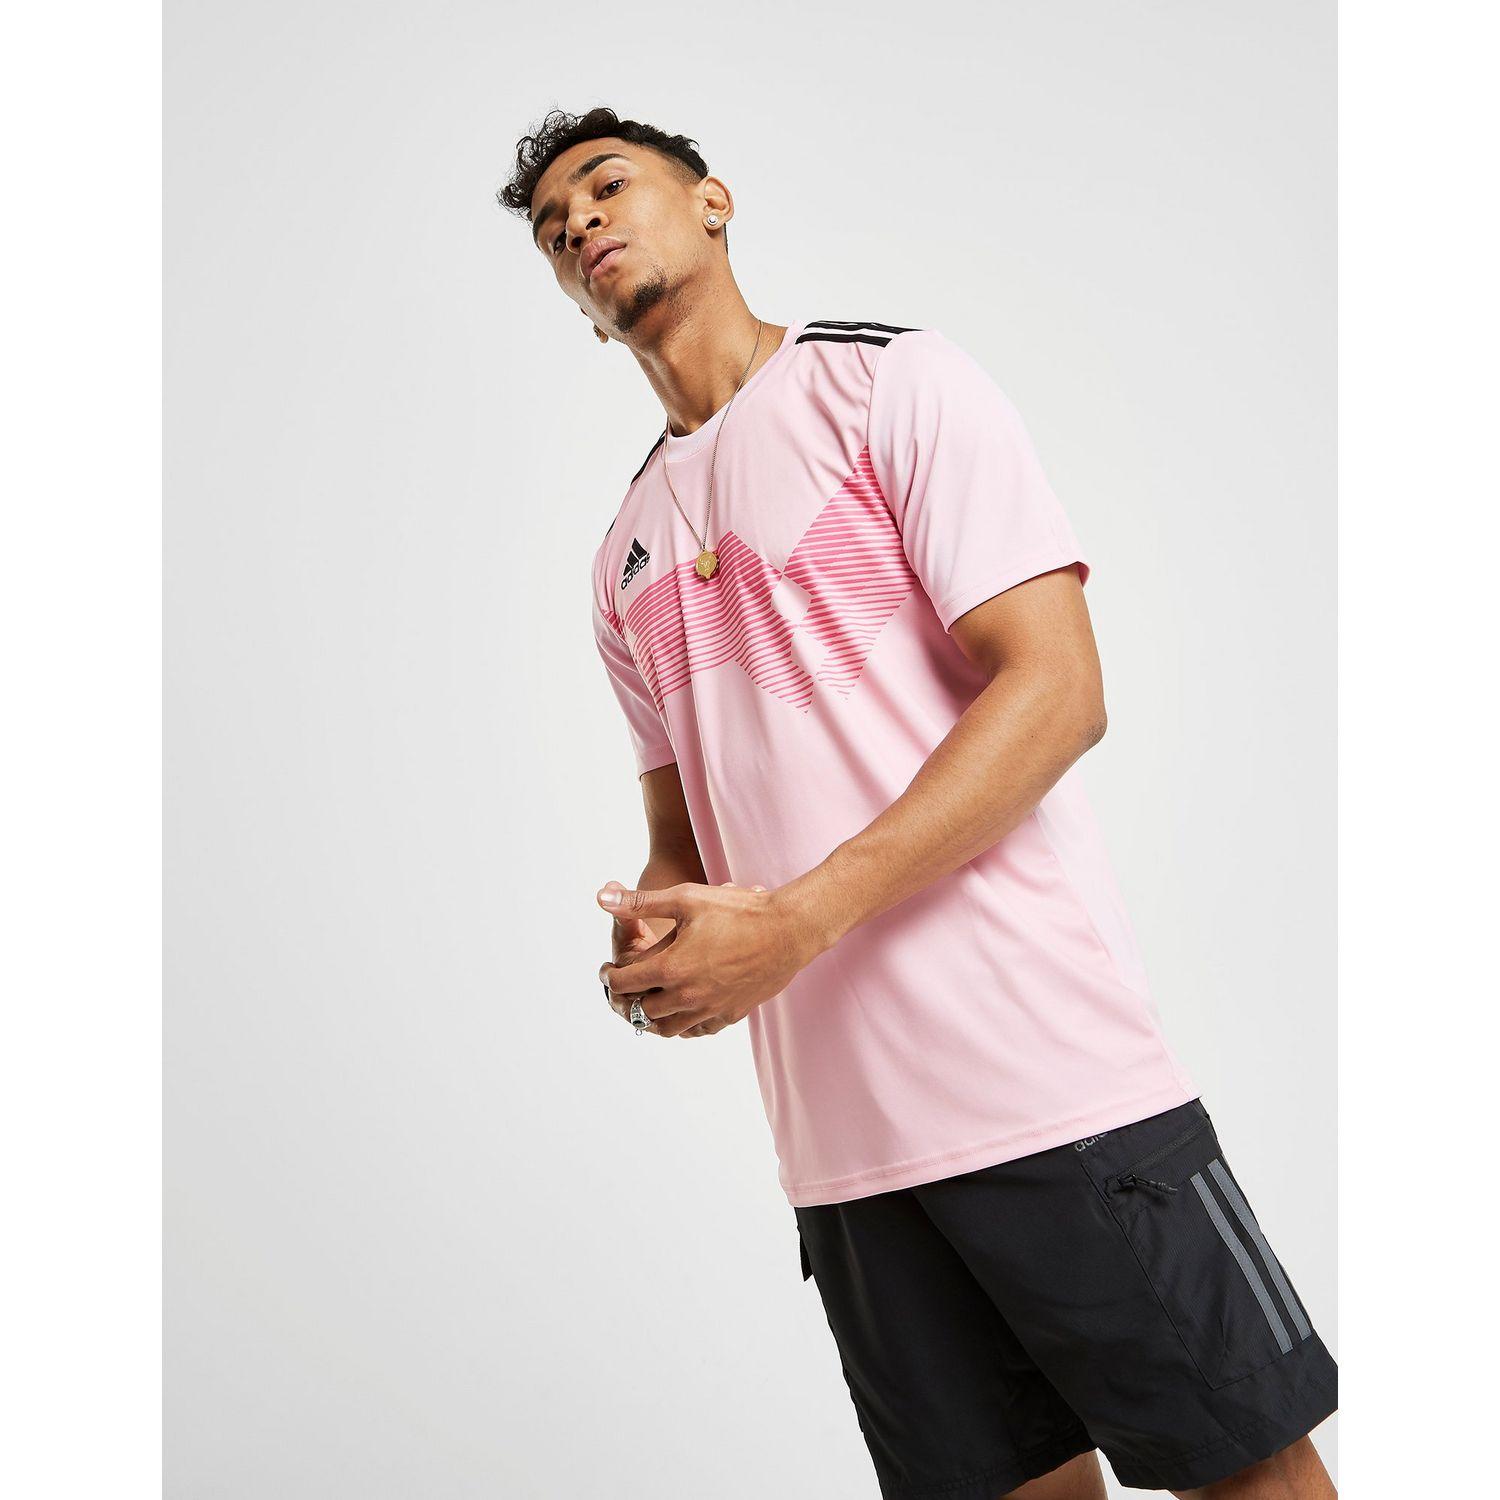 adidas campeon 19 jersey pink Off 54% - sirinscrochet.com